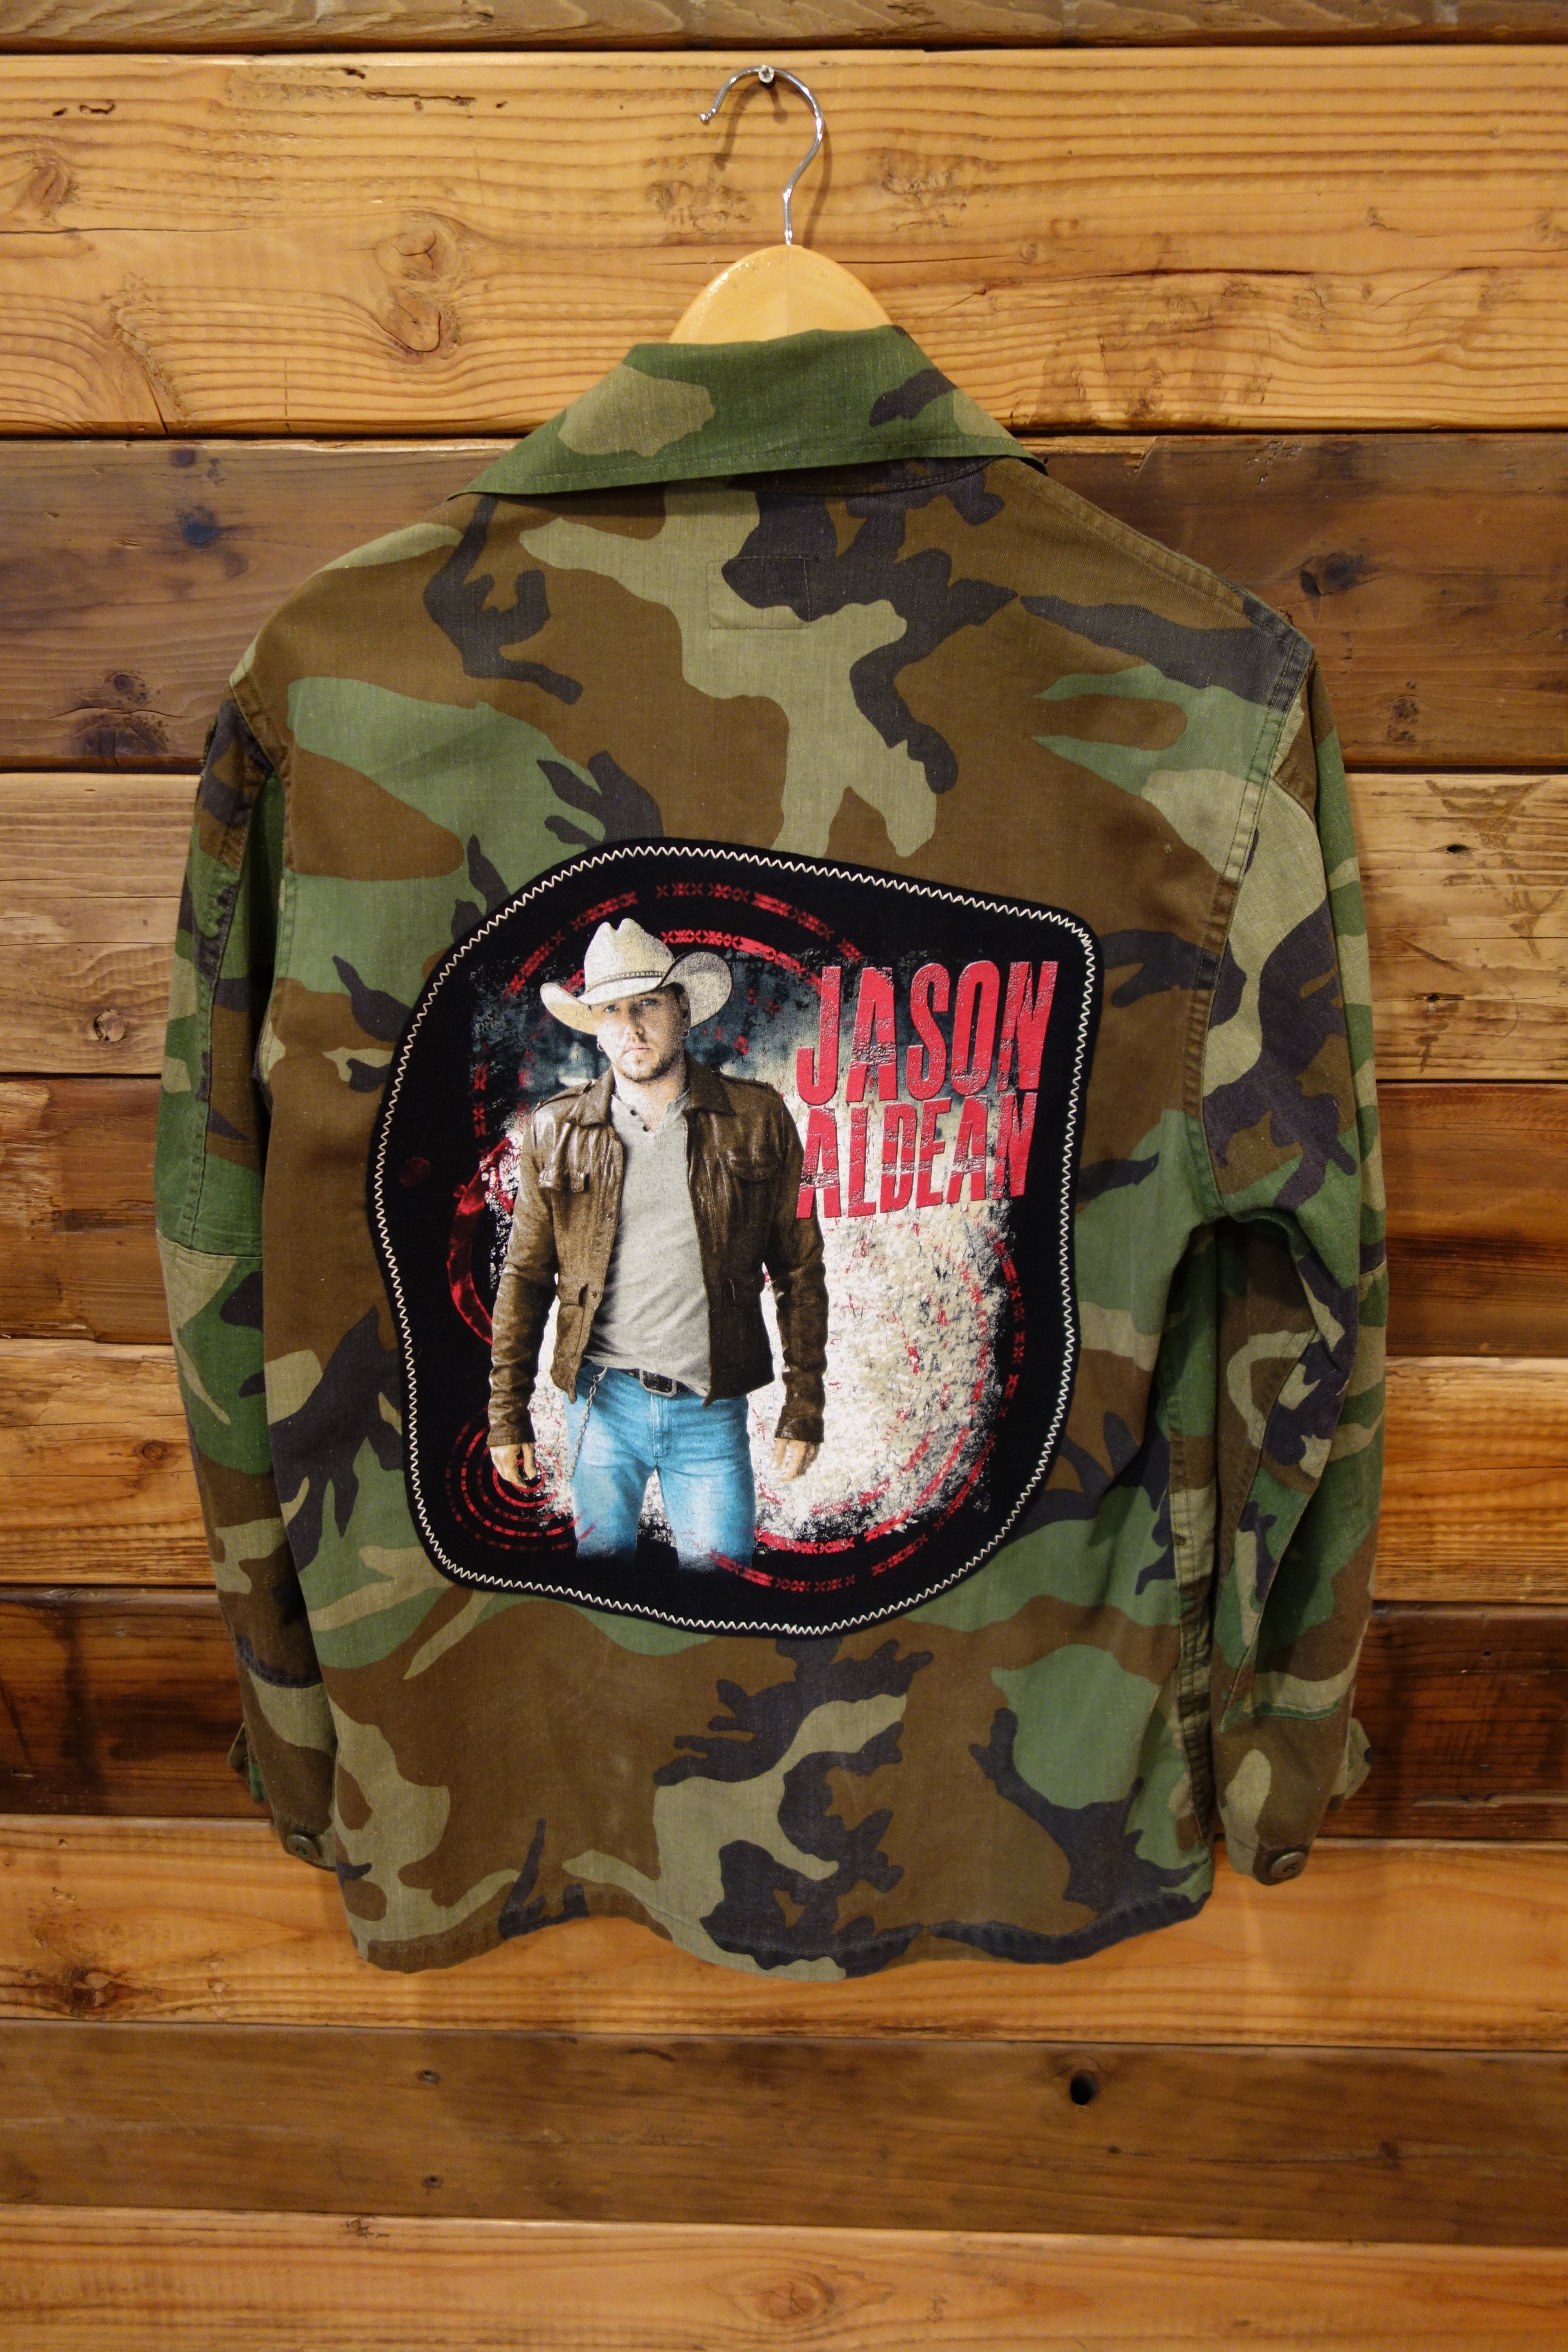 Jason Aldean concert tee one of a kind custom military camo jacket